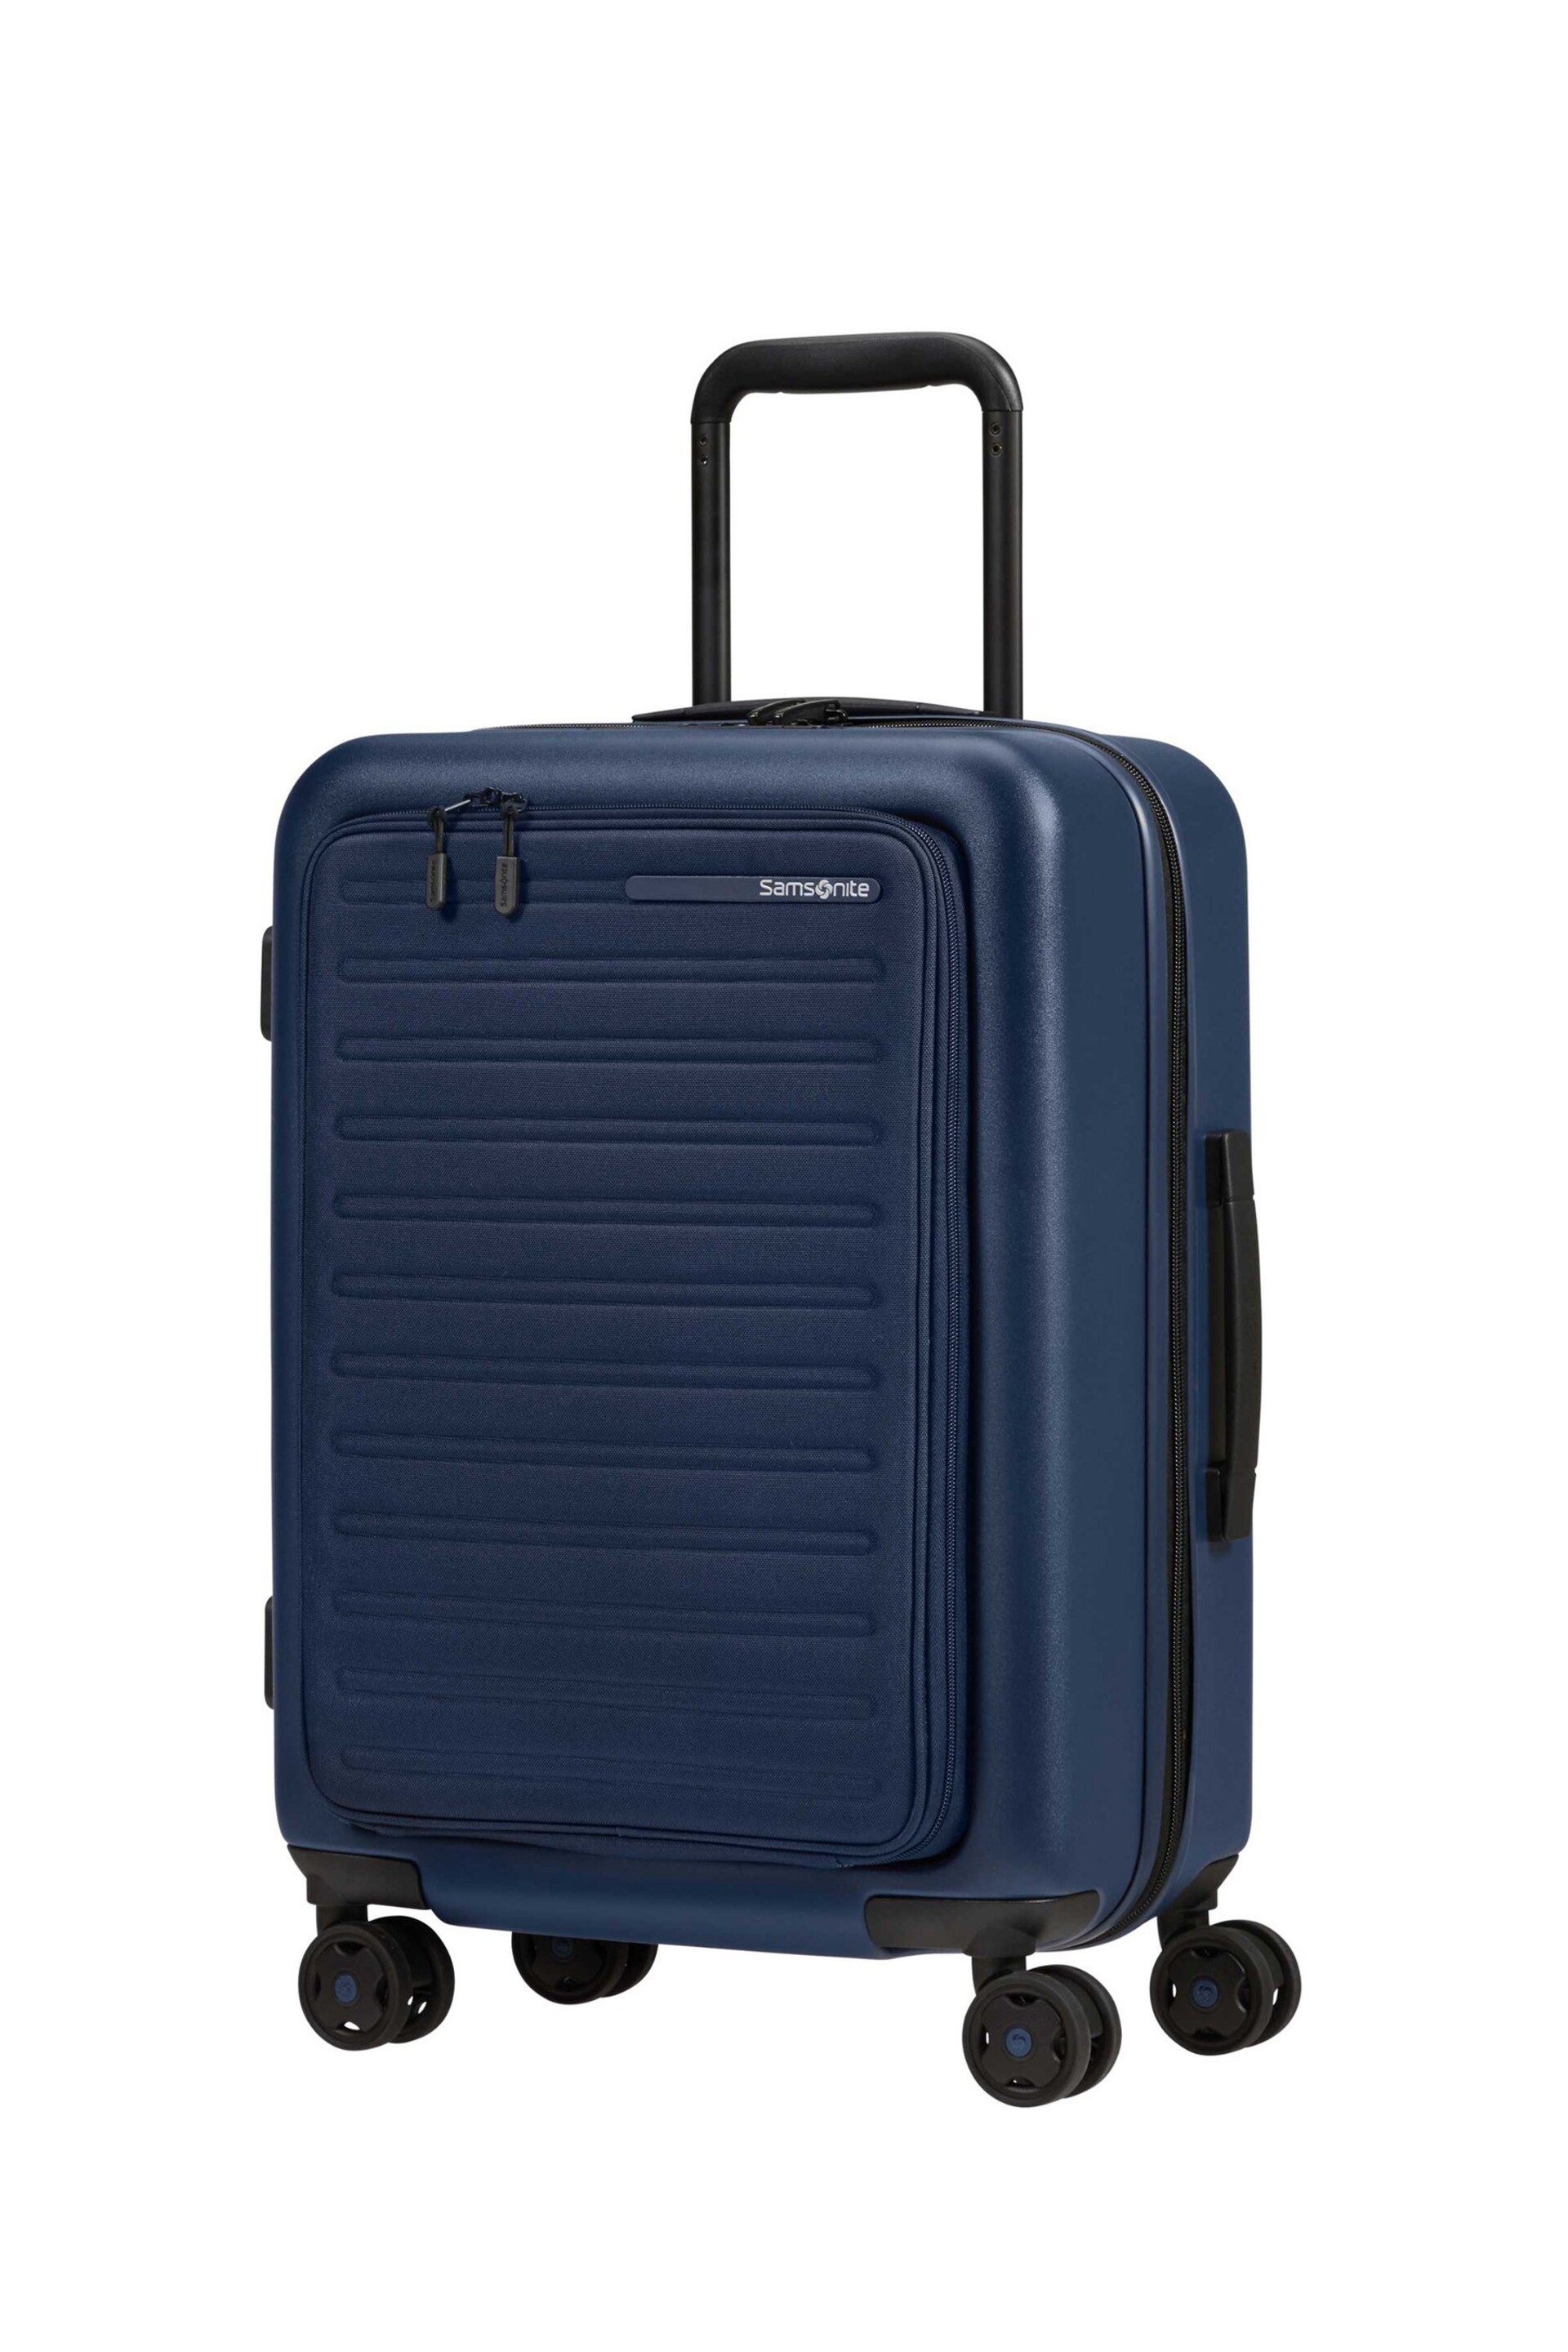 Samsonite StackD Spinner Cabin Suitcase 55cm - Image 3 of 13